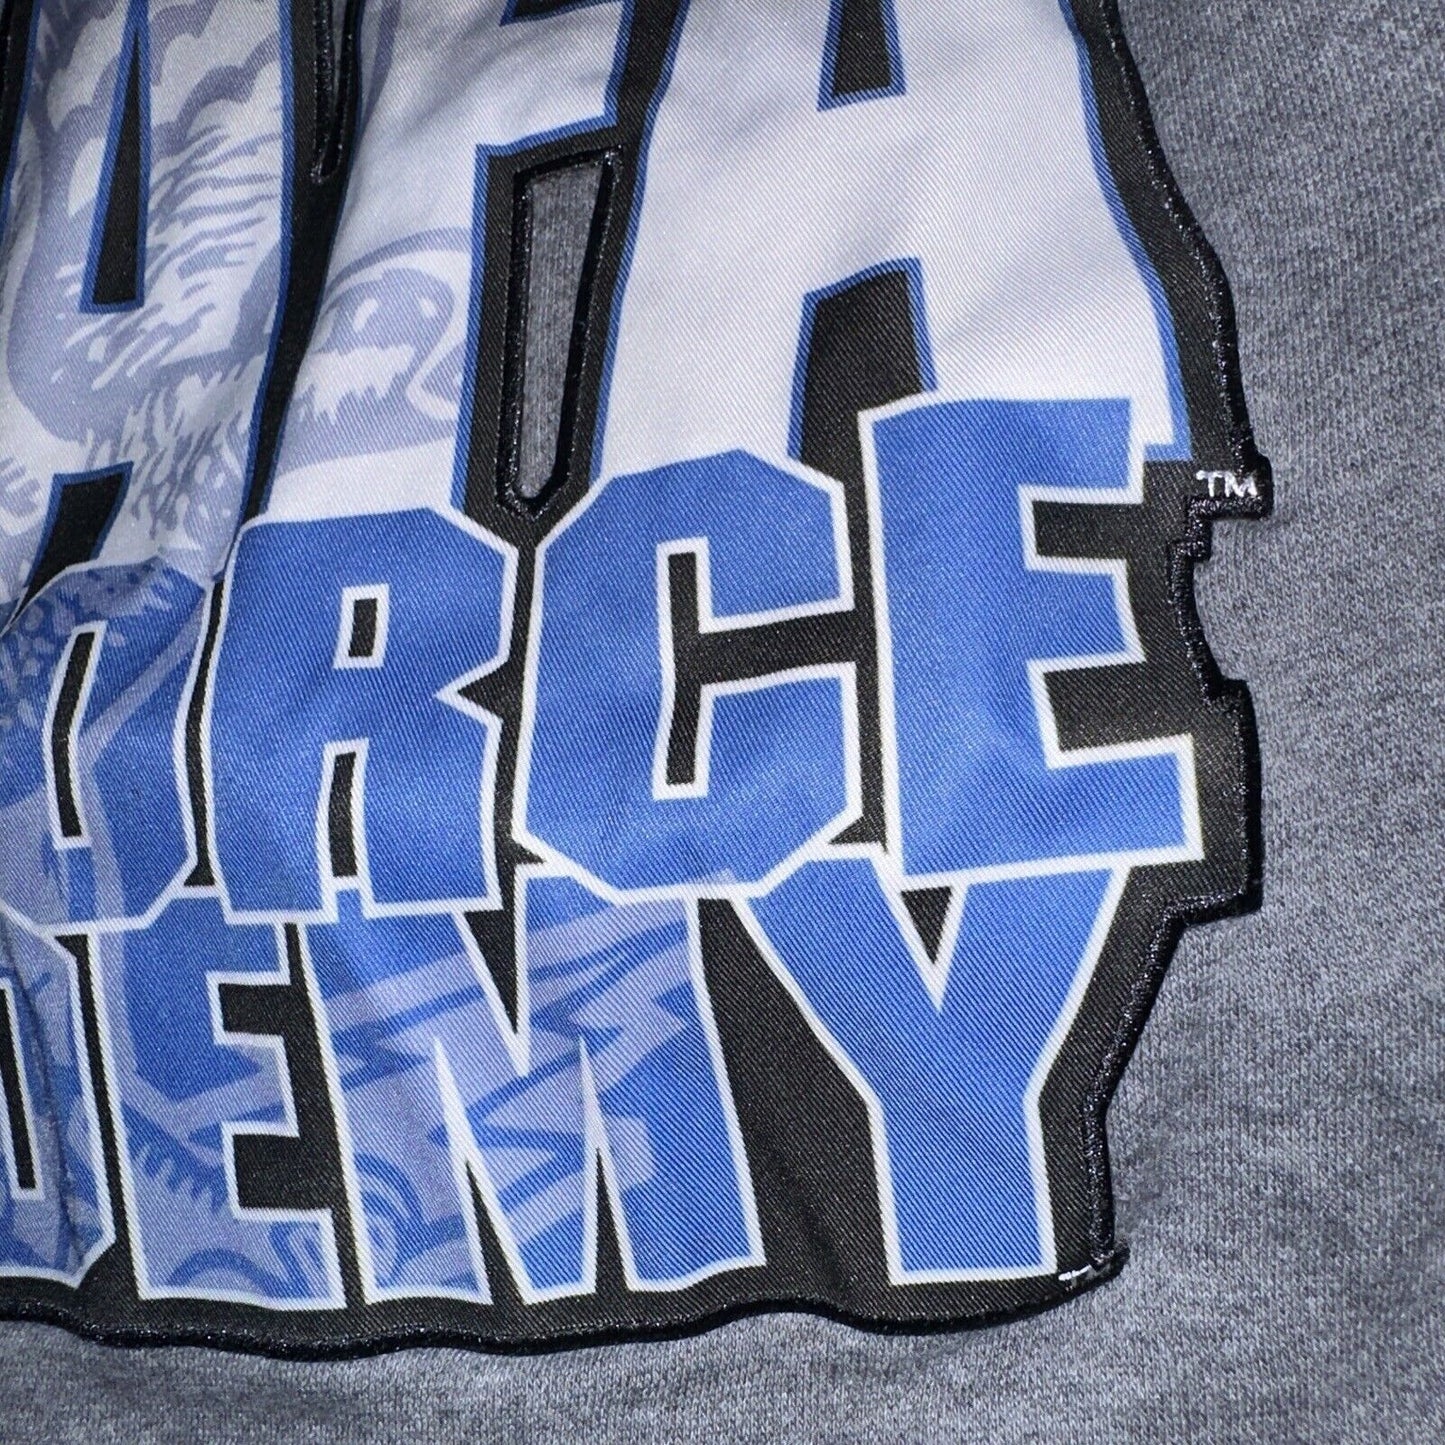 Men’s Gear For Sports Big Cotton Gray Large USAFA Air Force Academy Sweatshirt